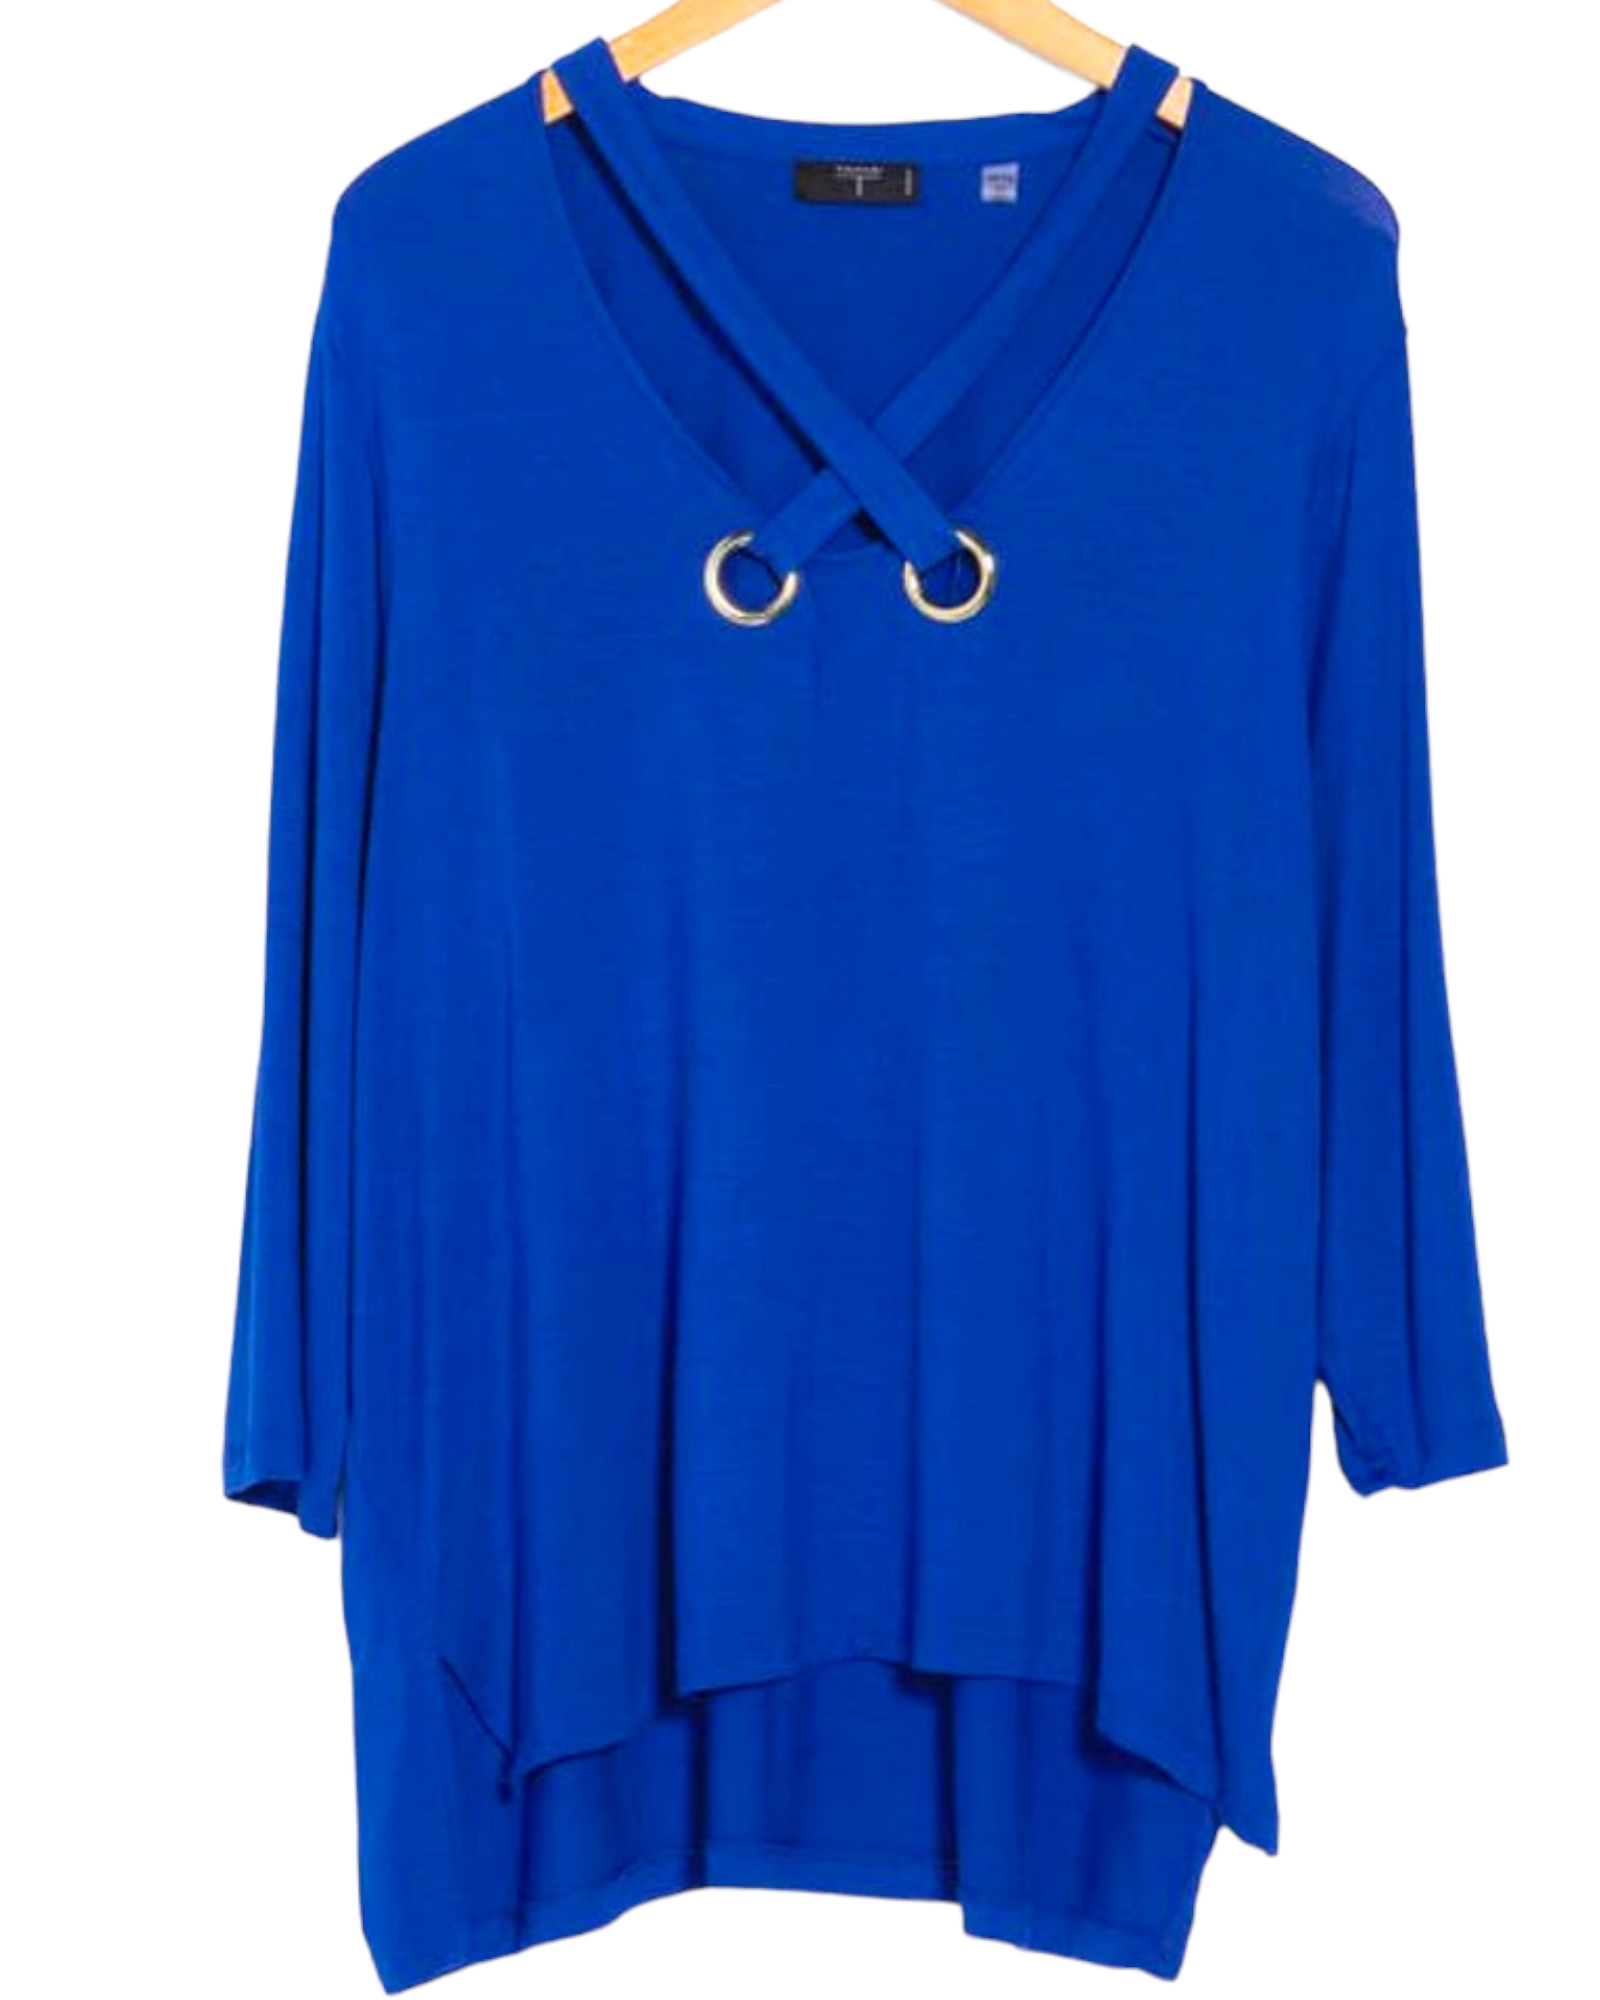 Bright Winter TAHARI WOMAN royal blue cross front grommet blouse